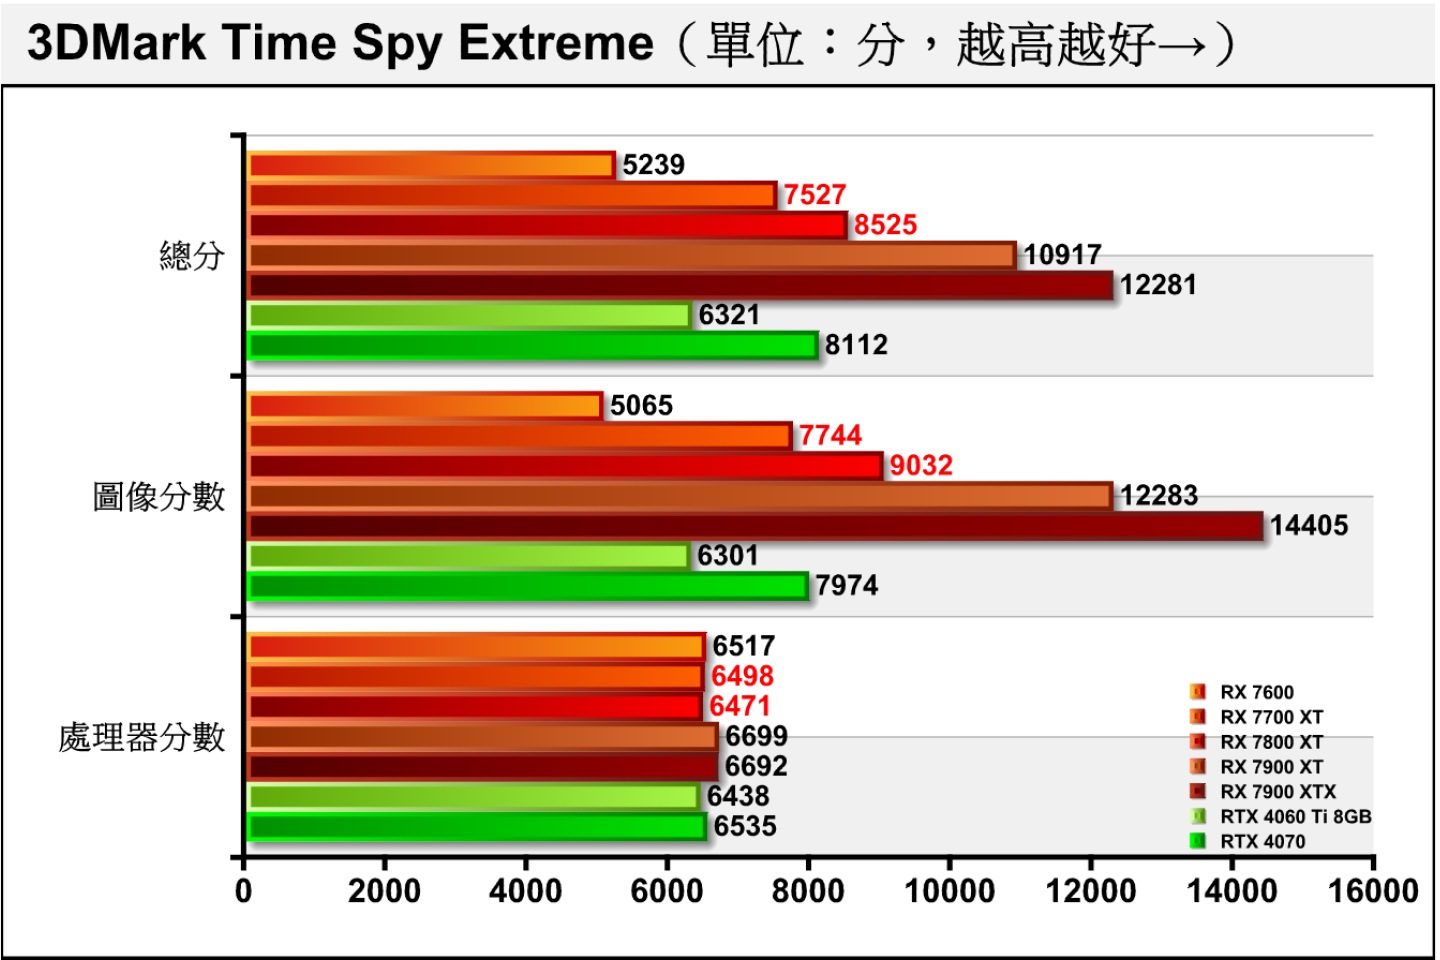 Time Spy Extreme將解析度提升至4K，2者的差距縮小至13.27%、22.89%。